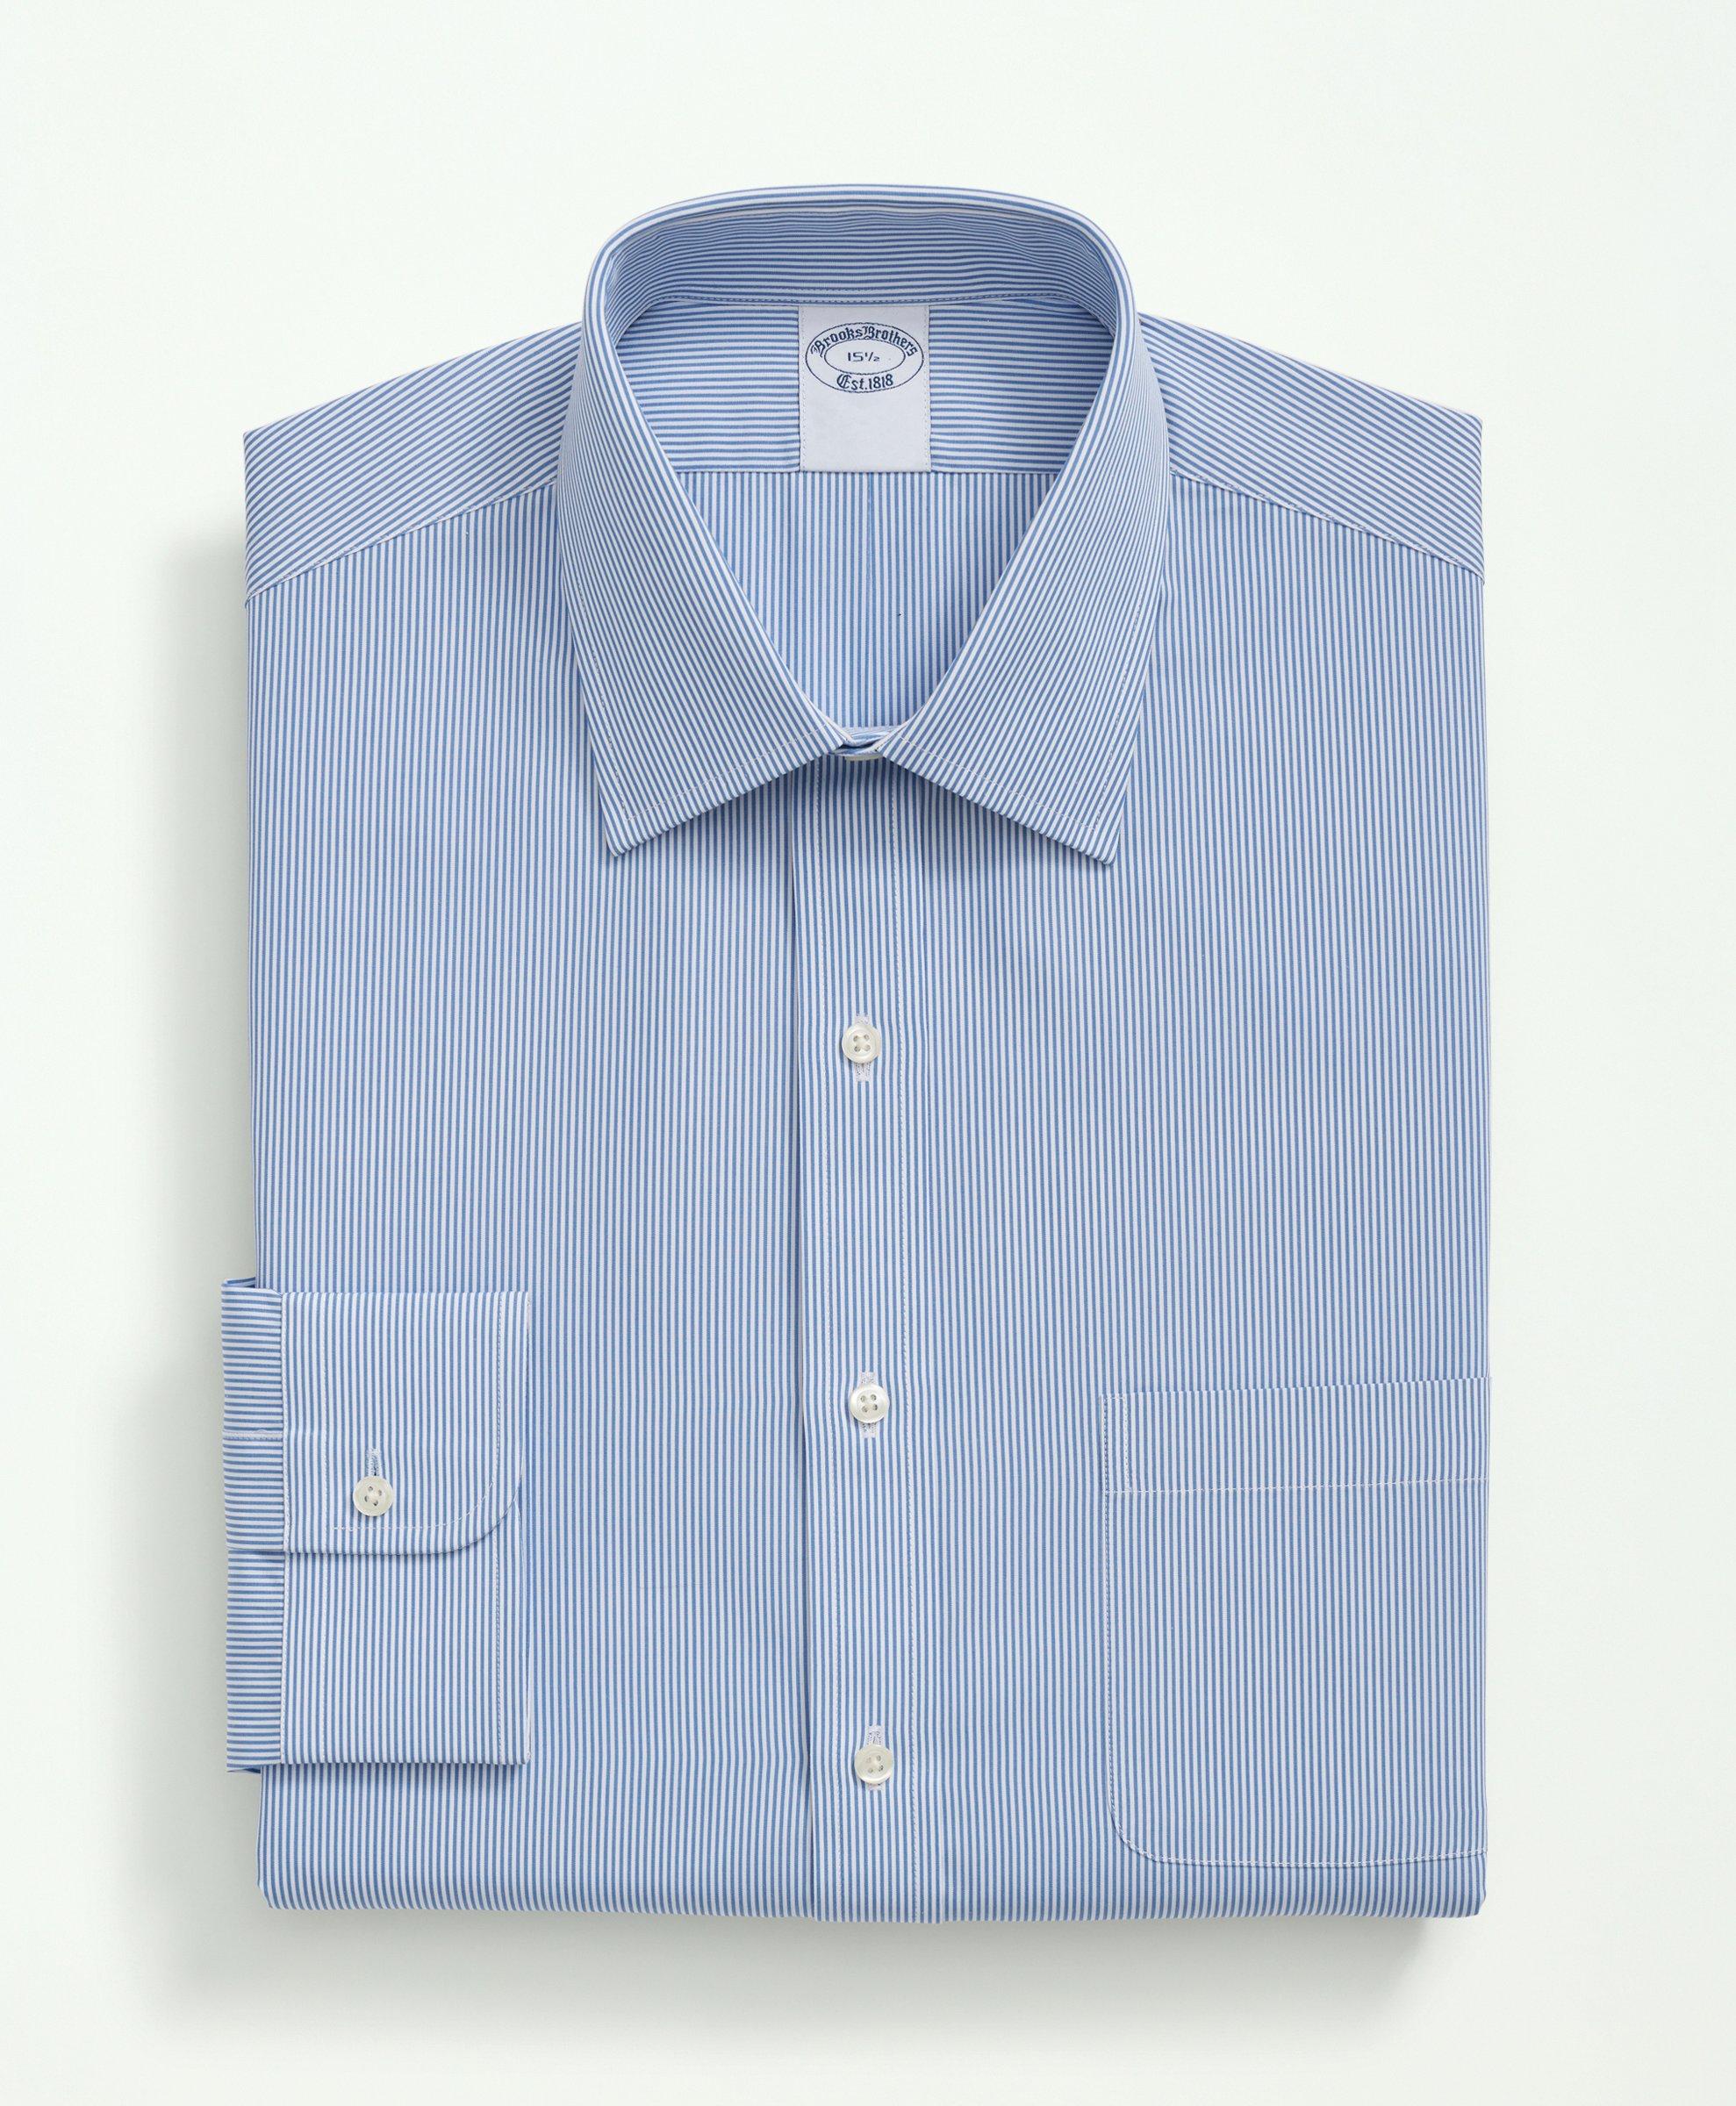 Shop Men's Dress Shirts | Multiple Shirt Fits | Brooks Brothers